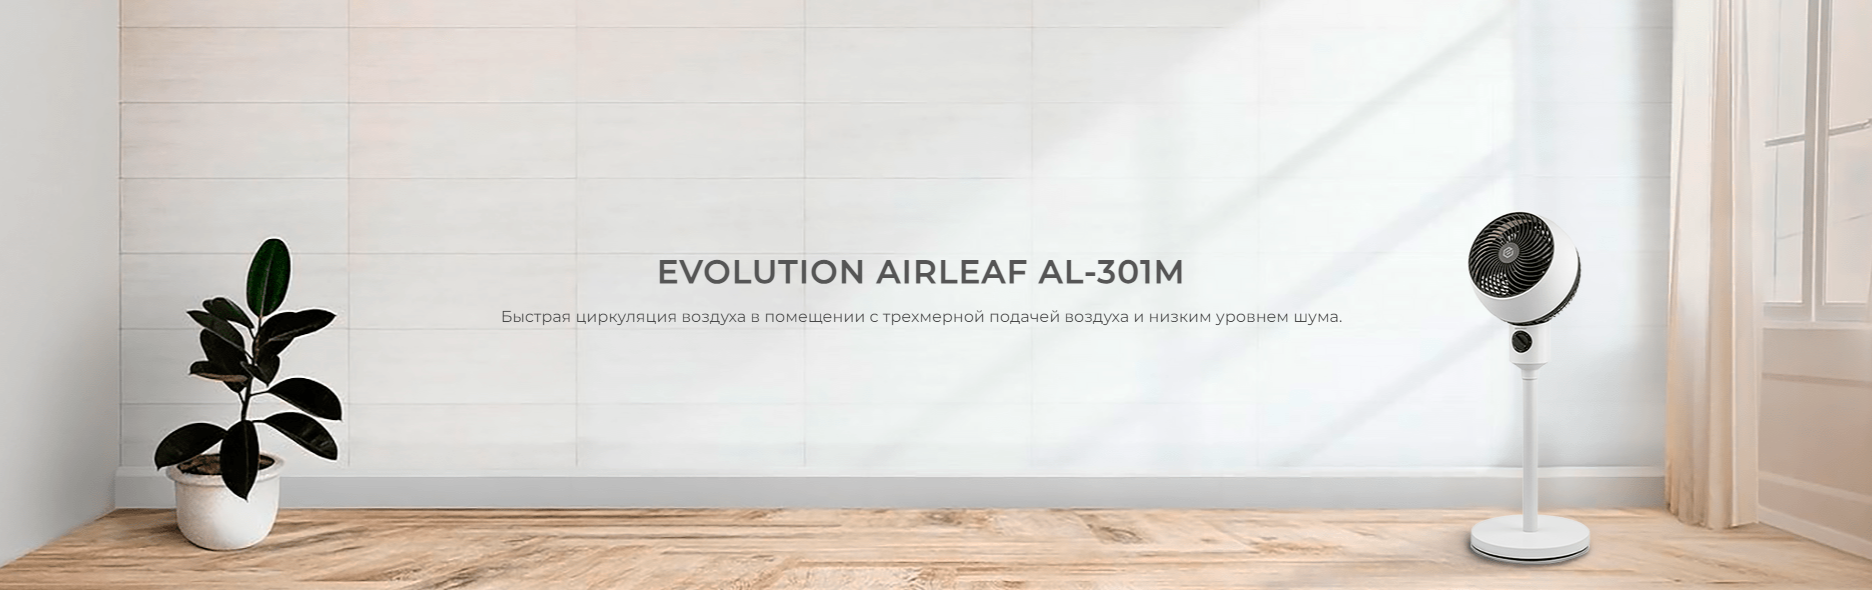 Evolution AirLeaf AL-301M